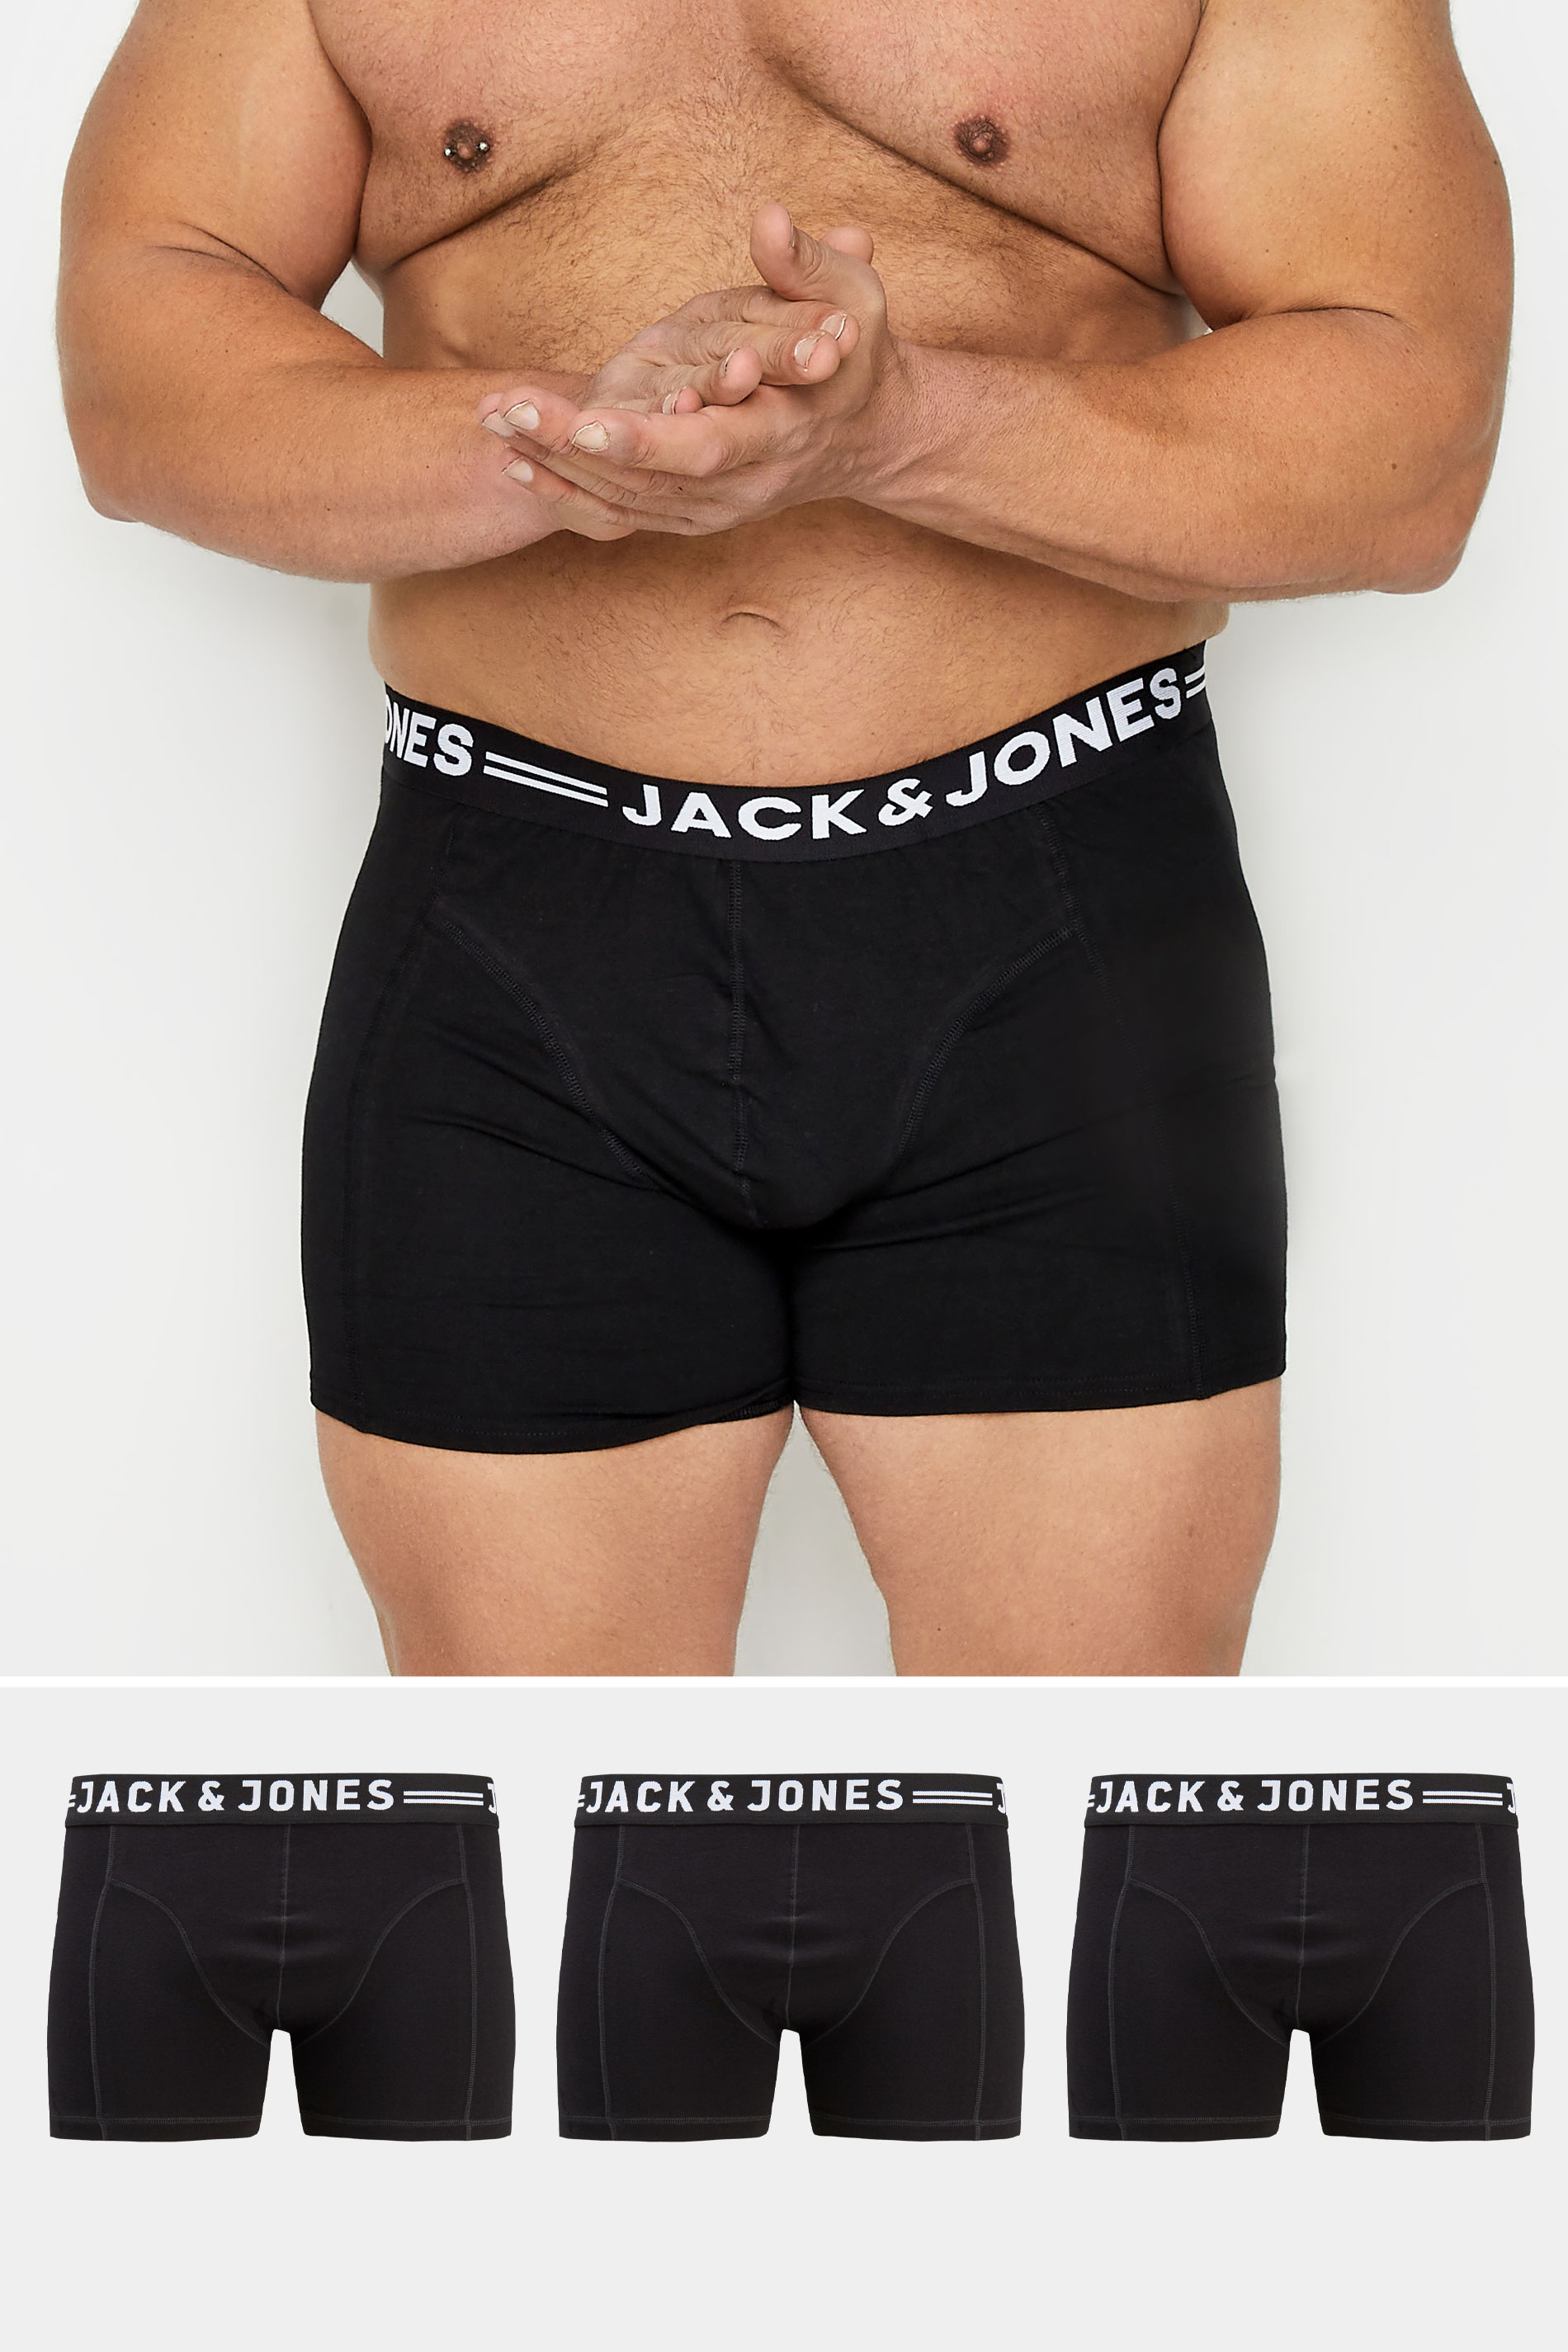 Image of Size 1Xl Mens Jack & Jones Black 3 Pack Trunks Big & Tall